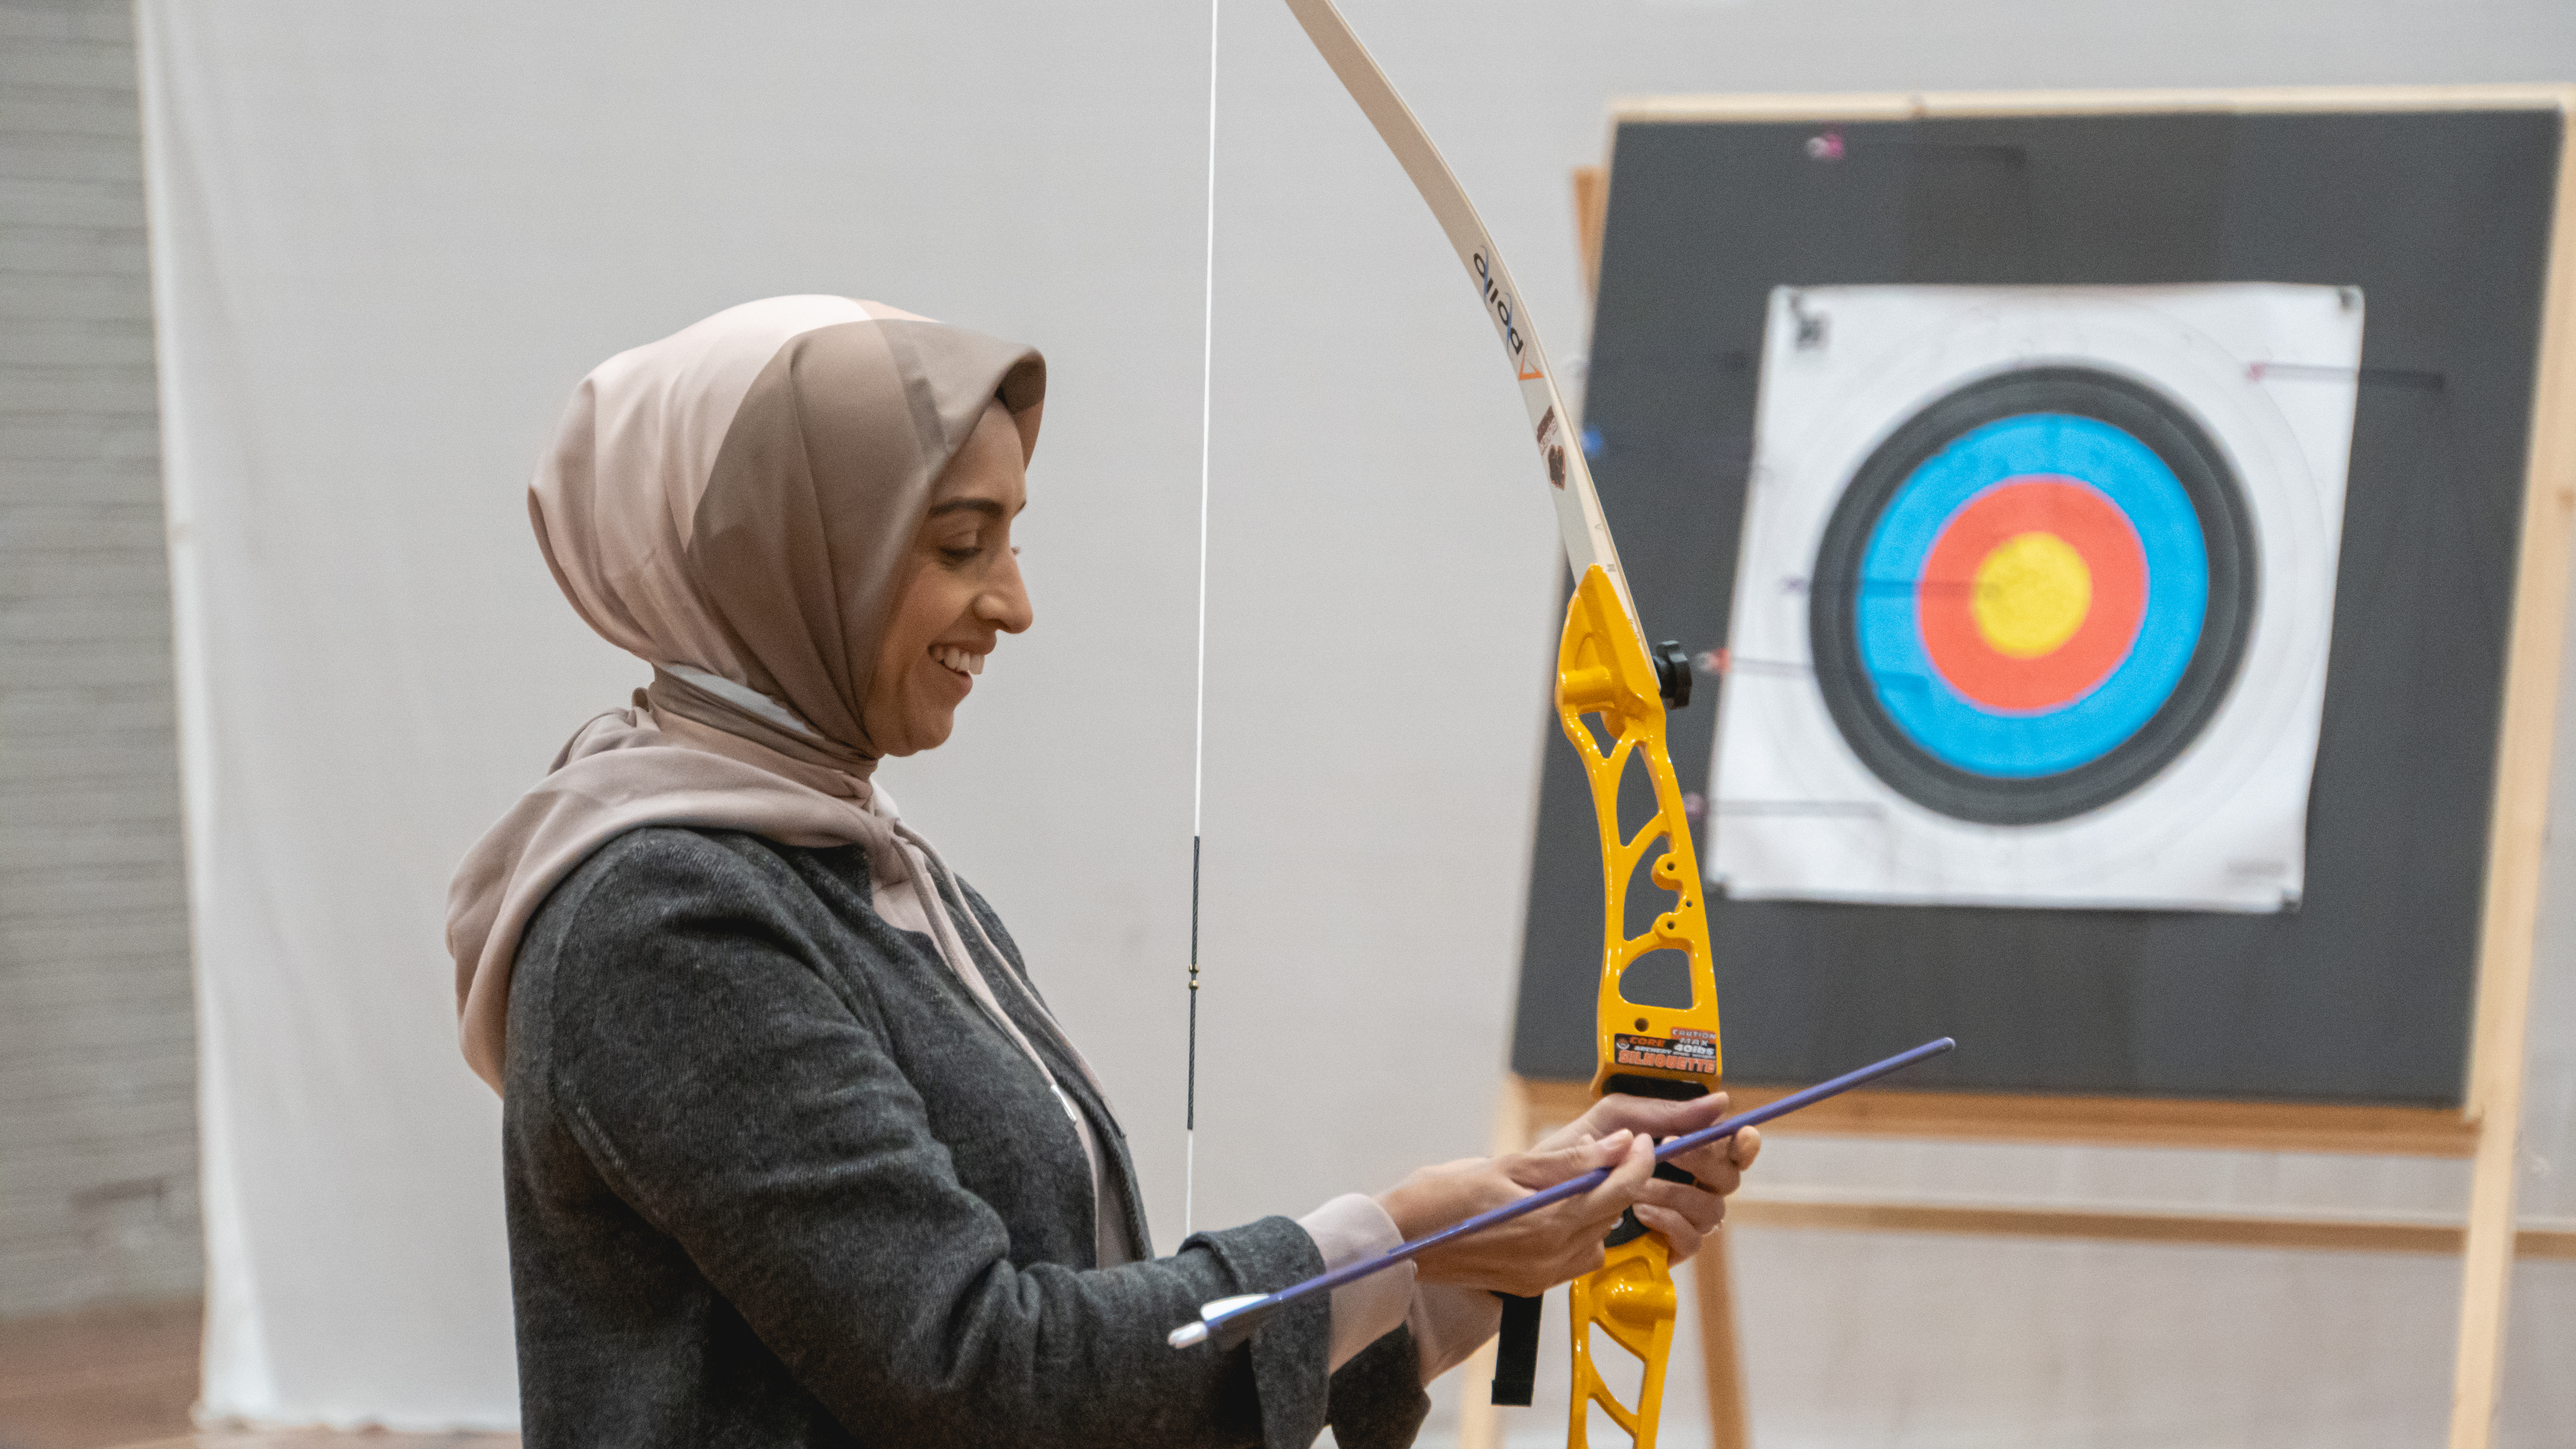 A woman nocks an arrow while smiling